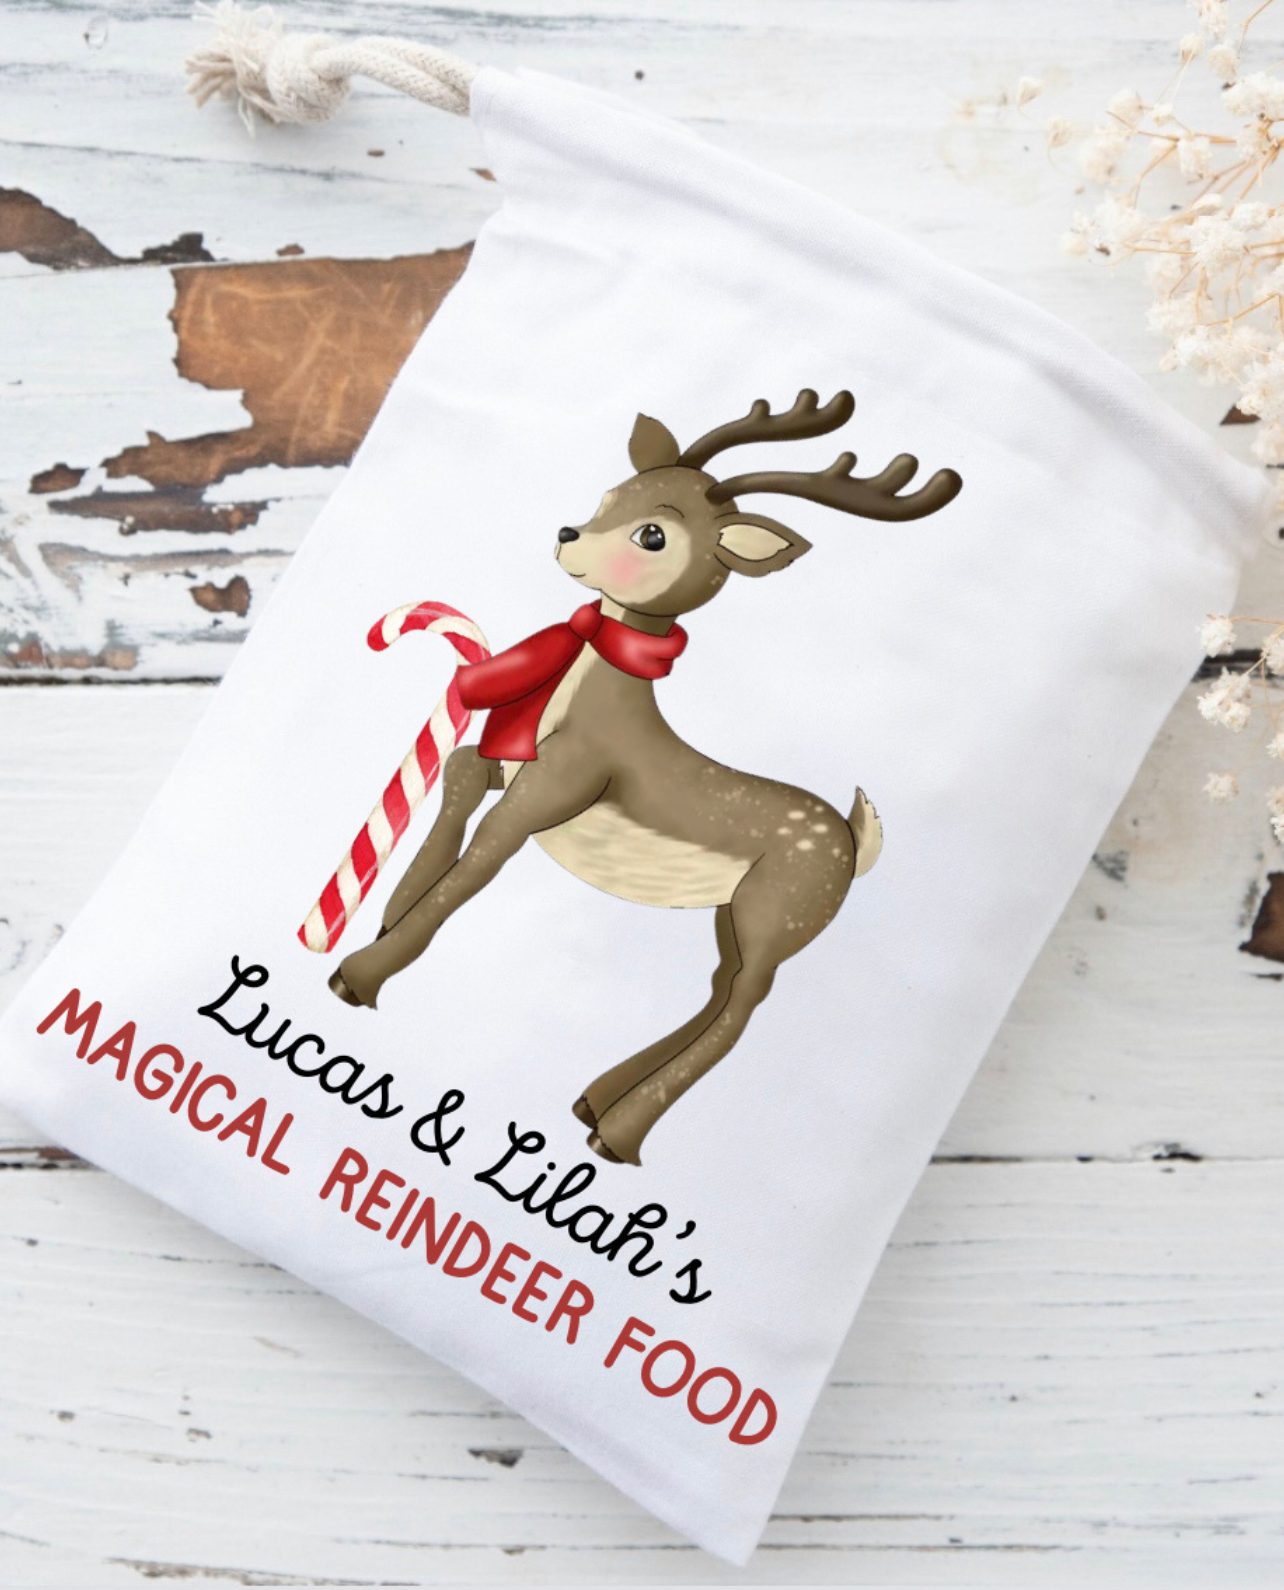 Magic Reindeer Food Bag